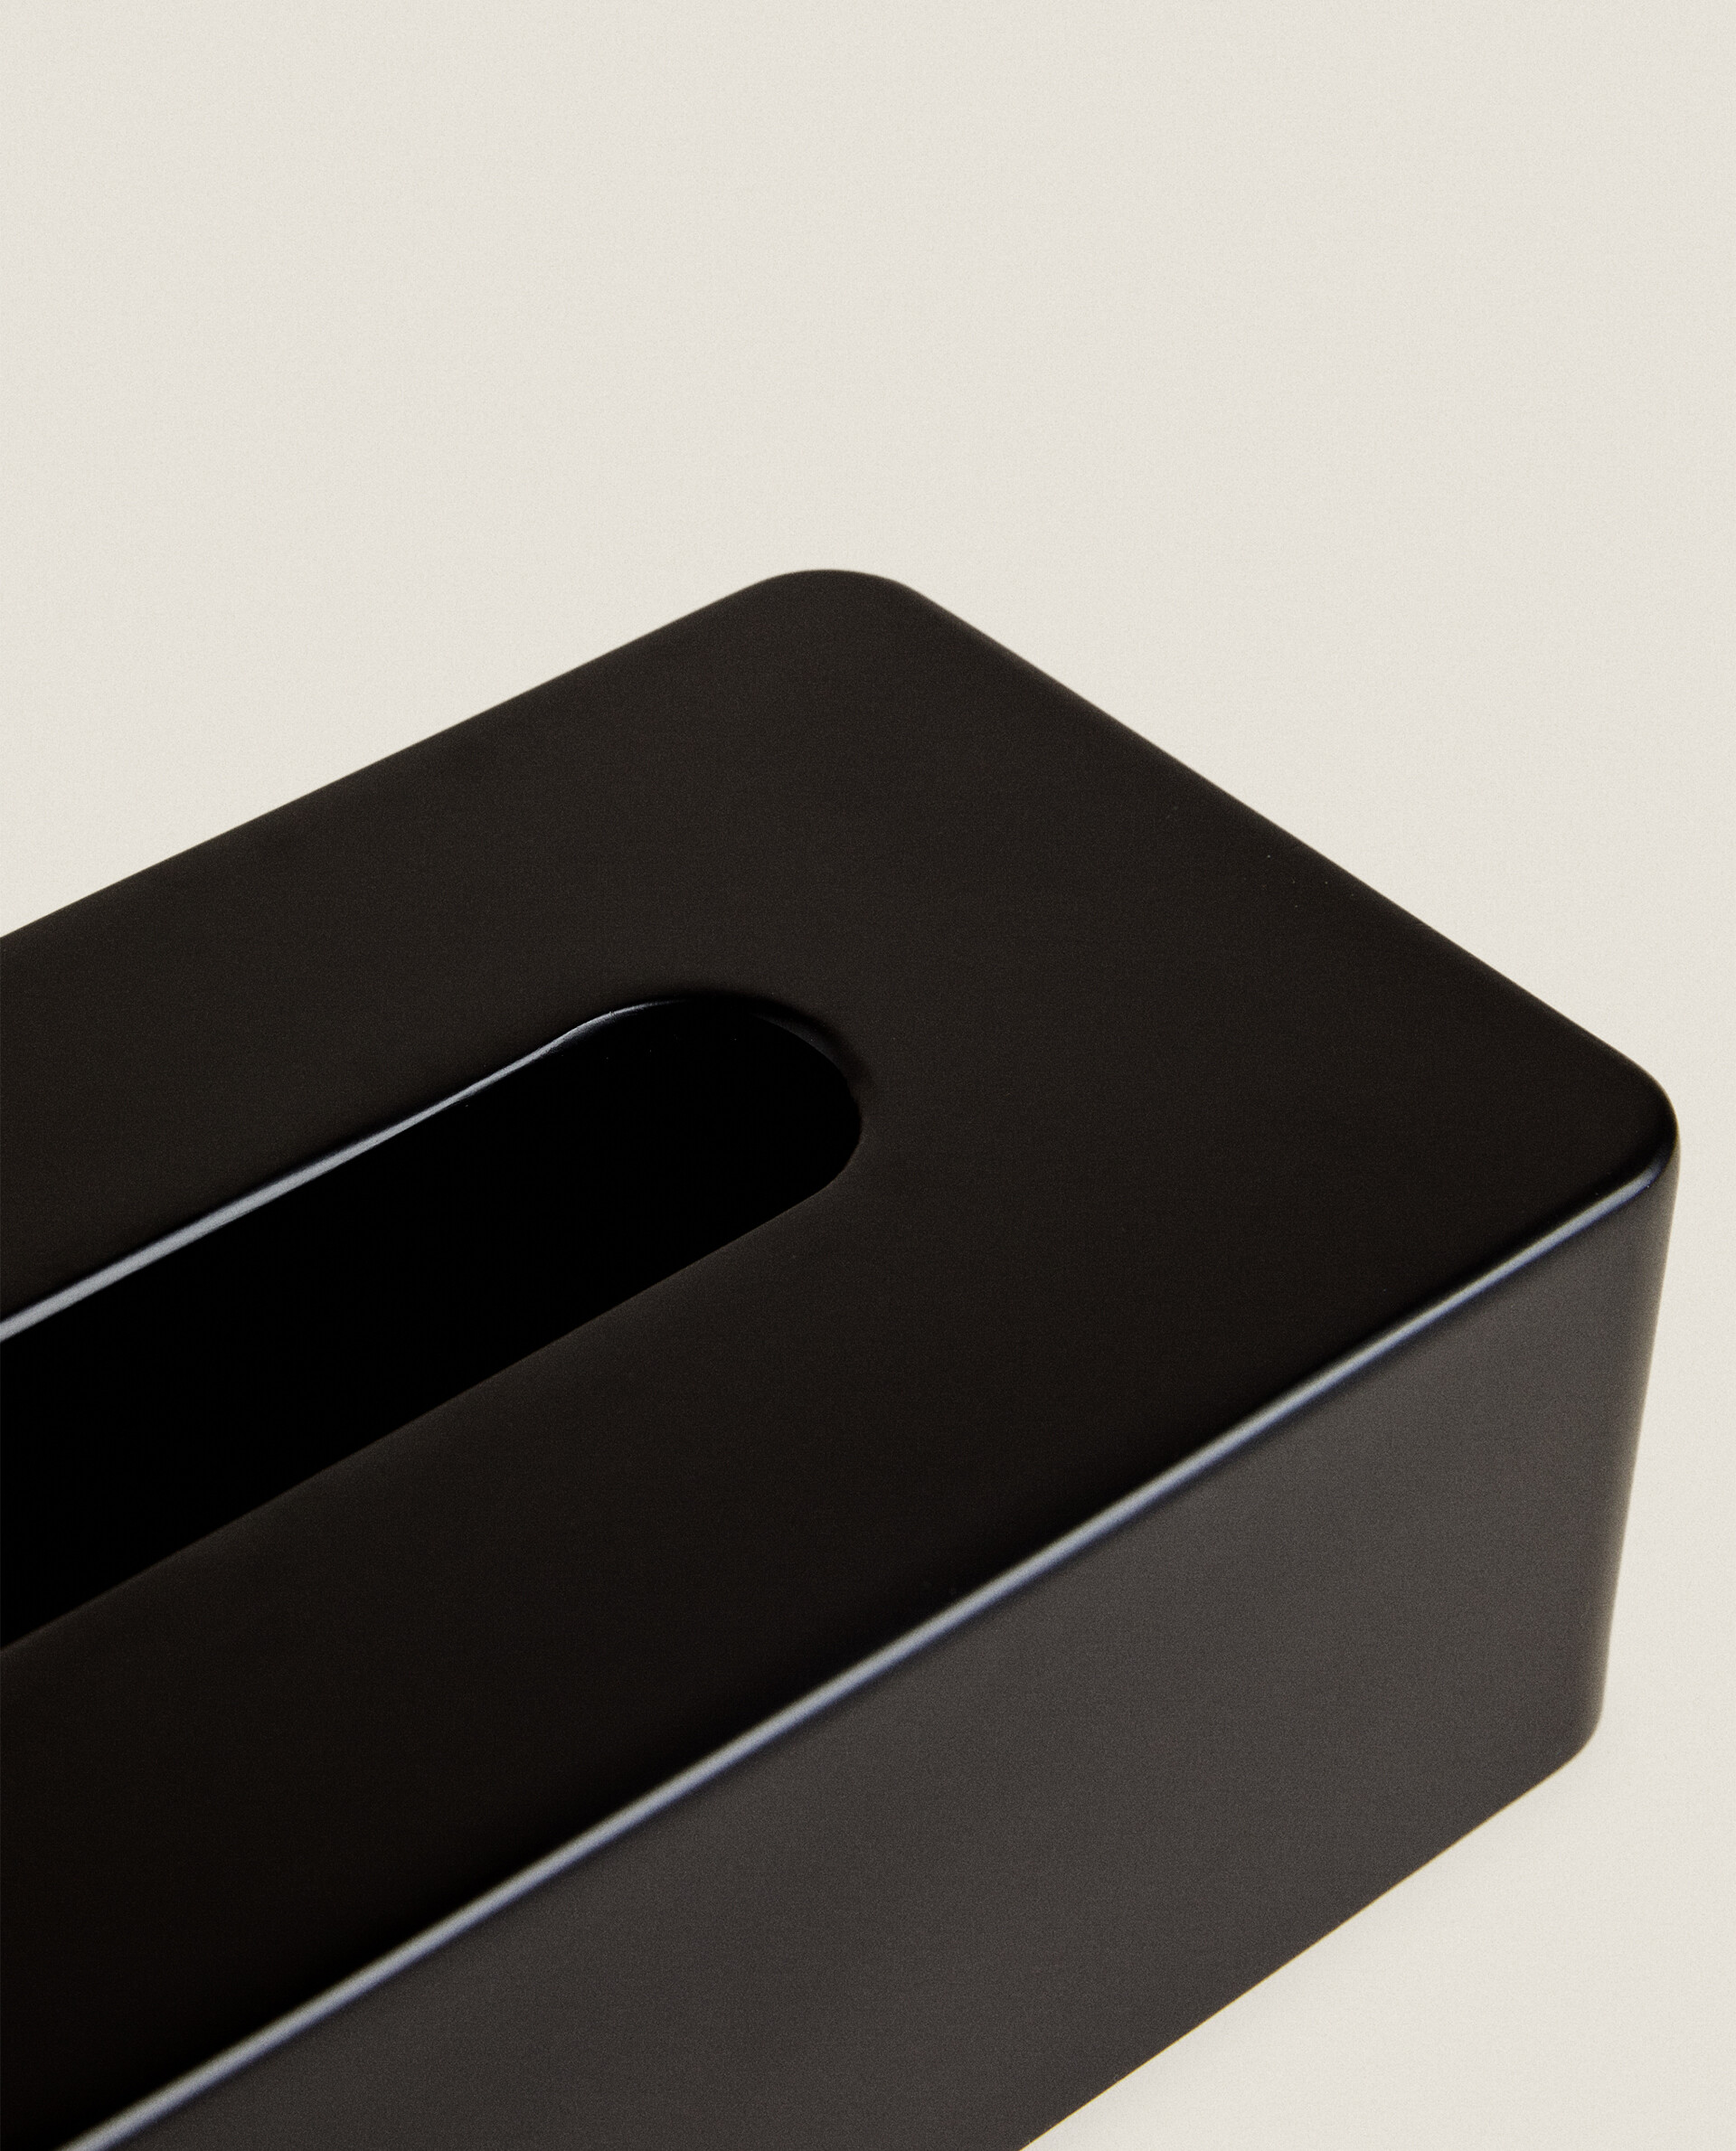 RESIN TISSUE BOX - Black